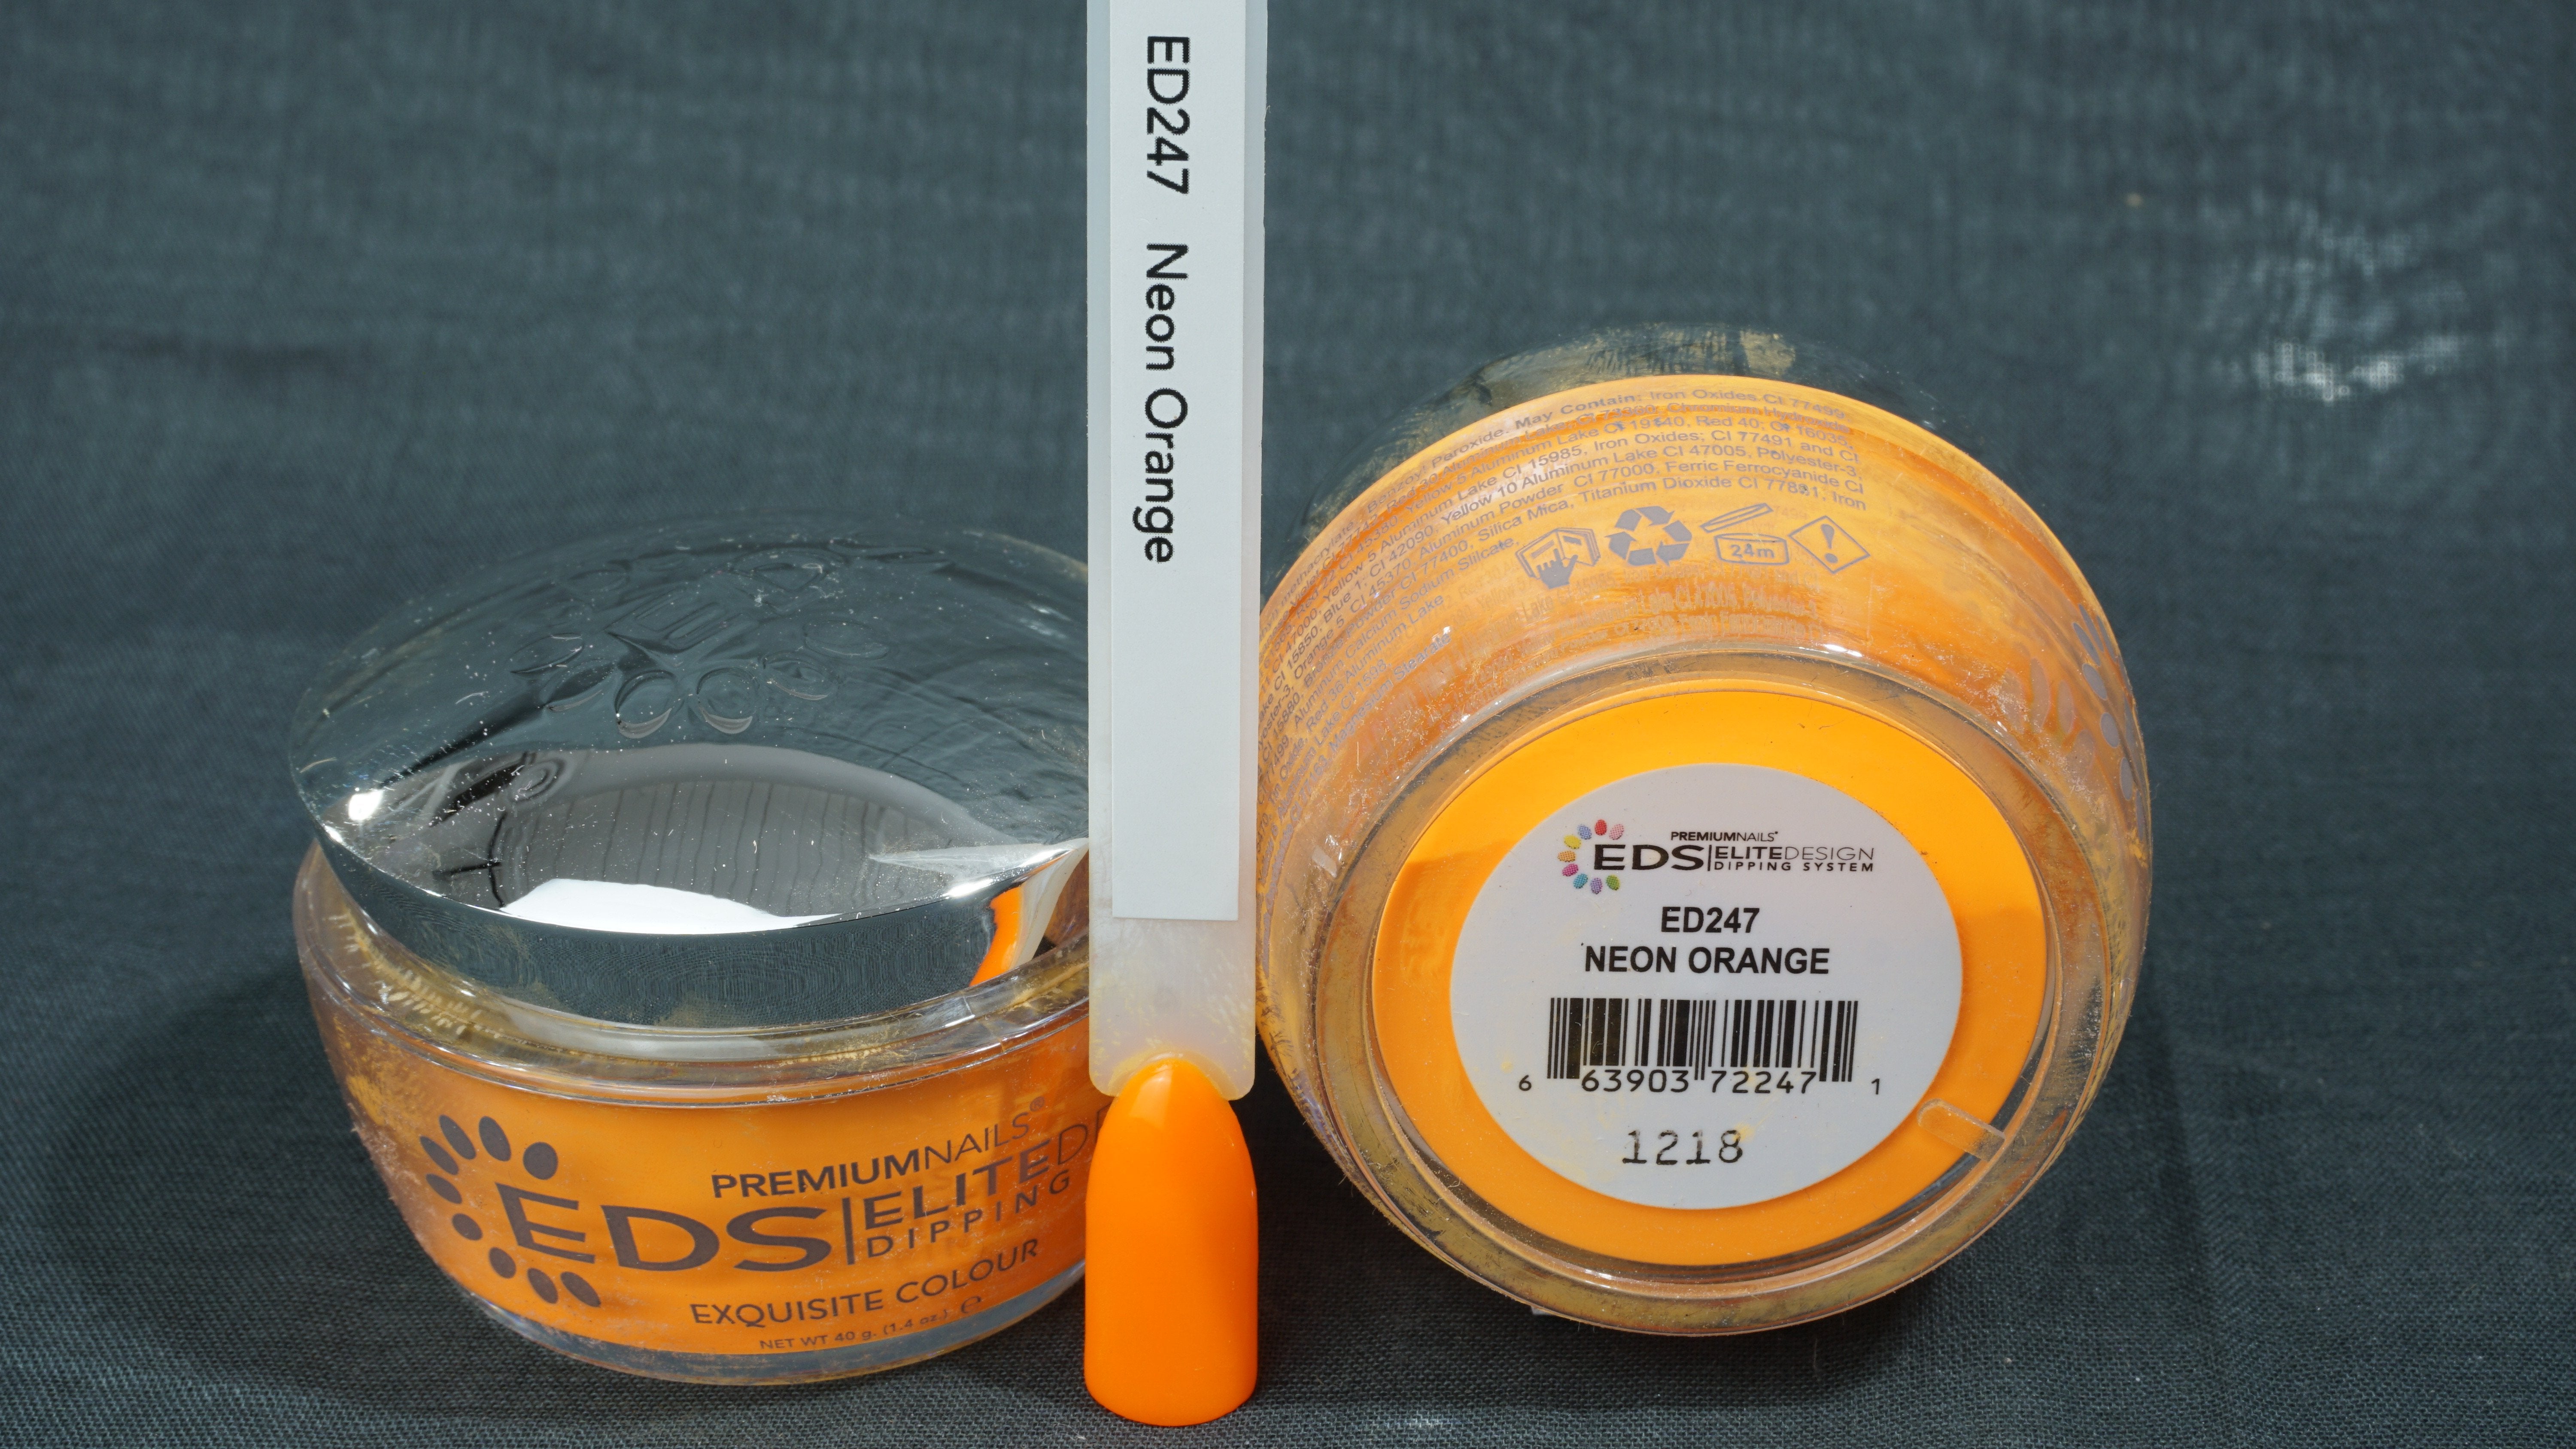 ED247 Neon Orange 40 g - ELITEDESIGN PREMIUM NAILS Dip Powder